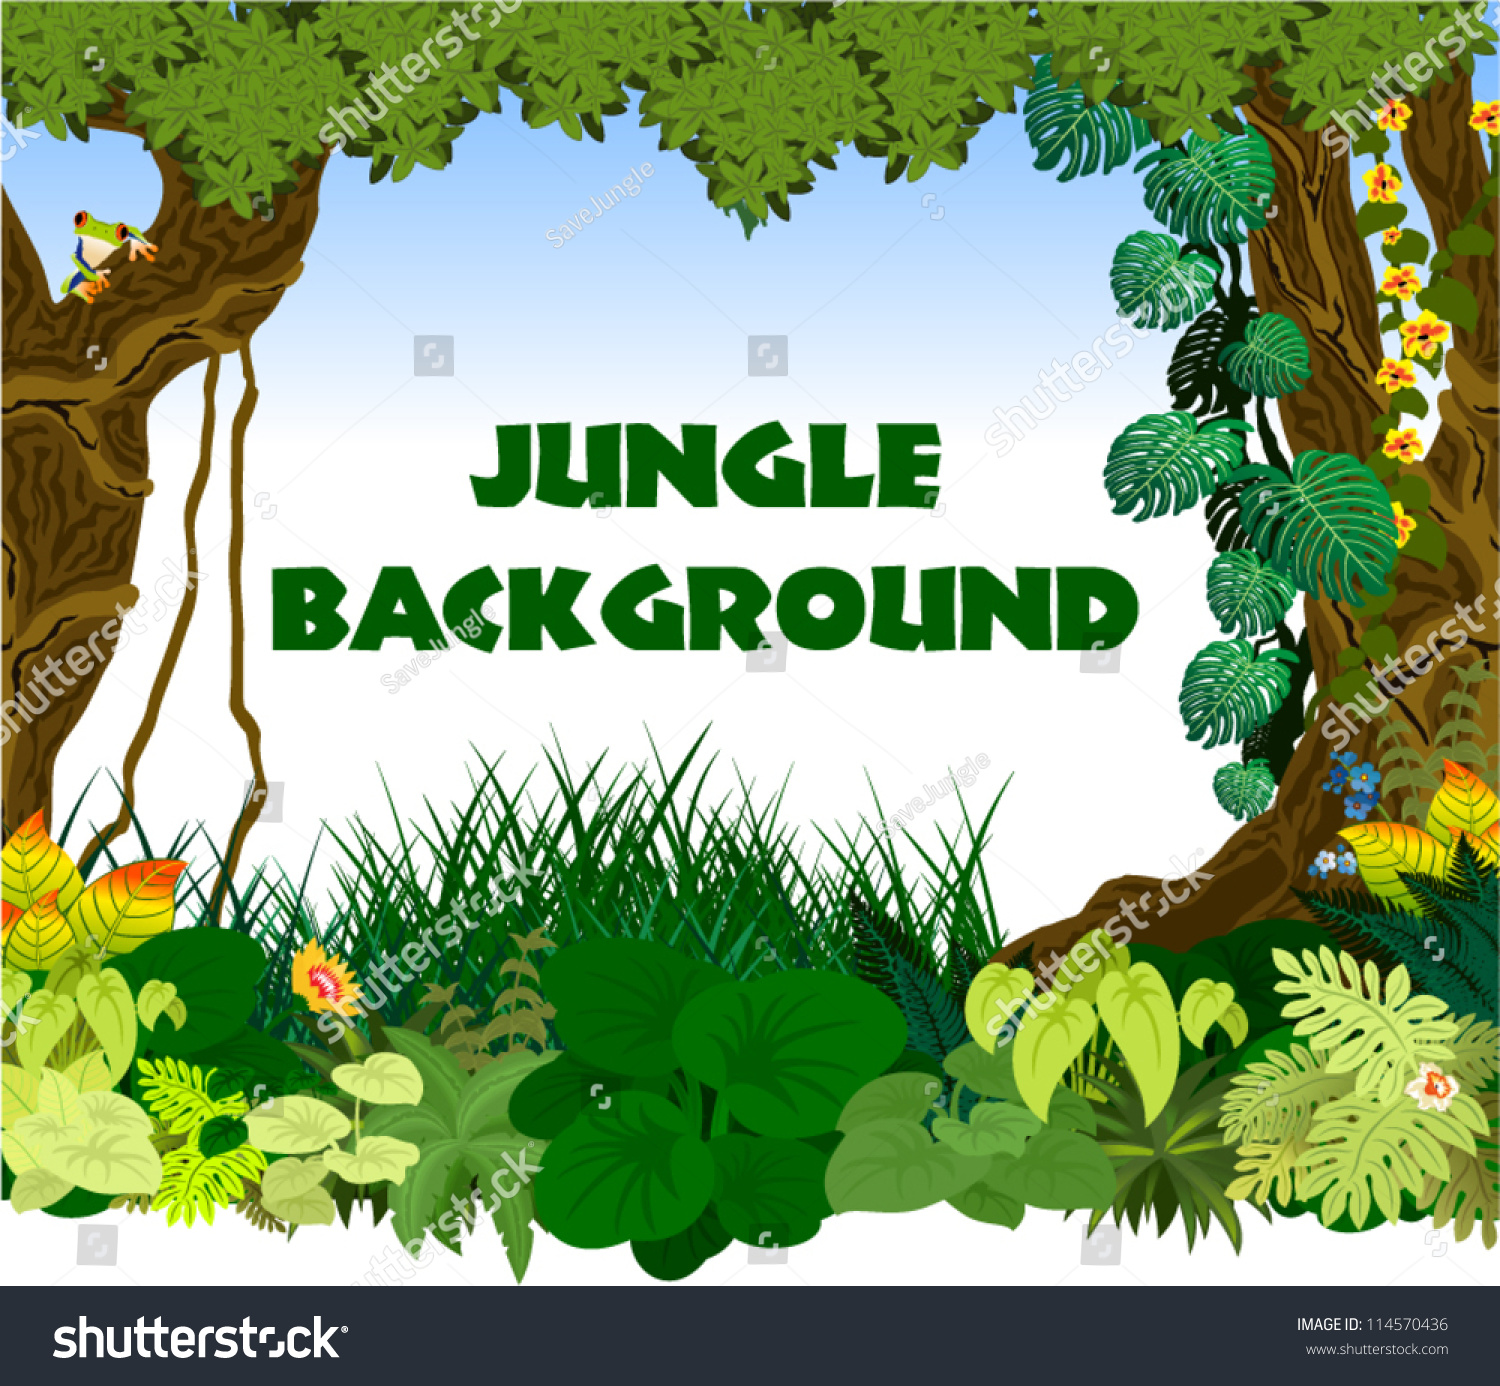 jungle clipart vector - photo #43